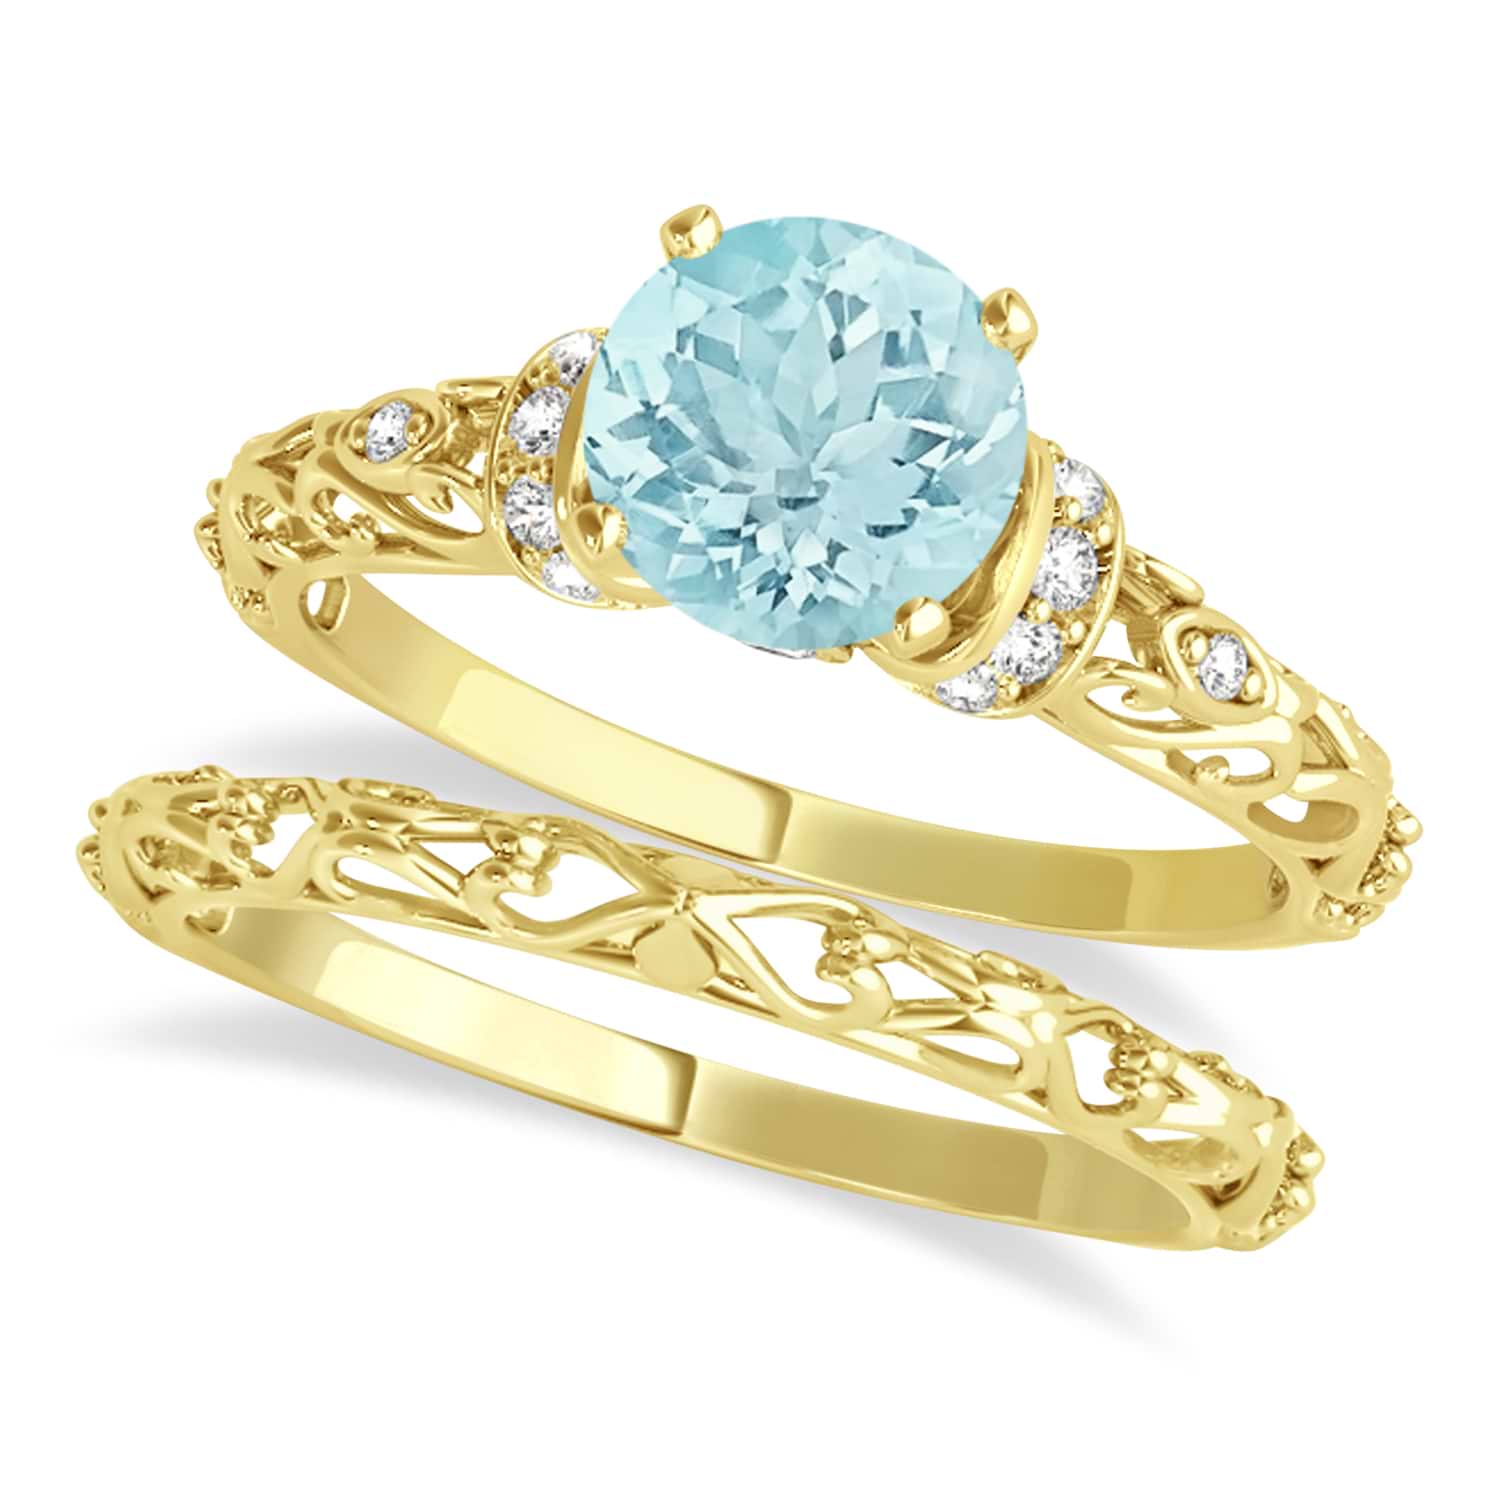 Aquamarine & Diamond Antique Bridal Set 18k Yellow Gold (1.62ct)